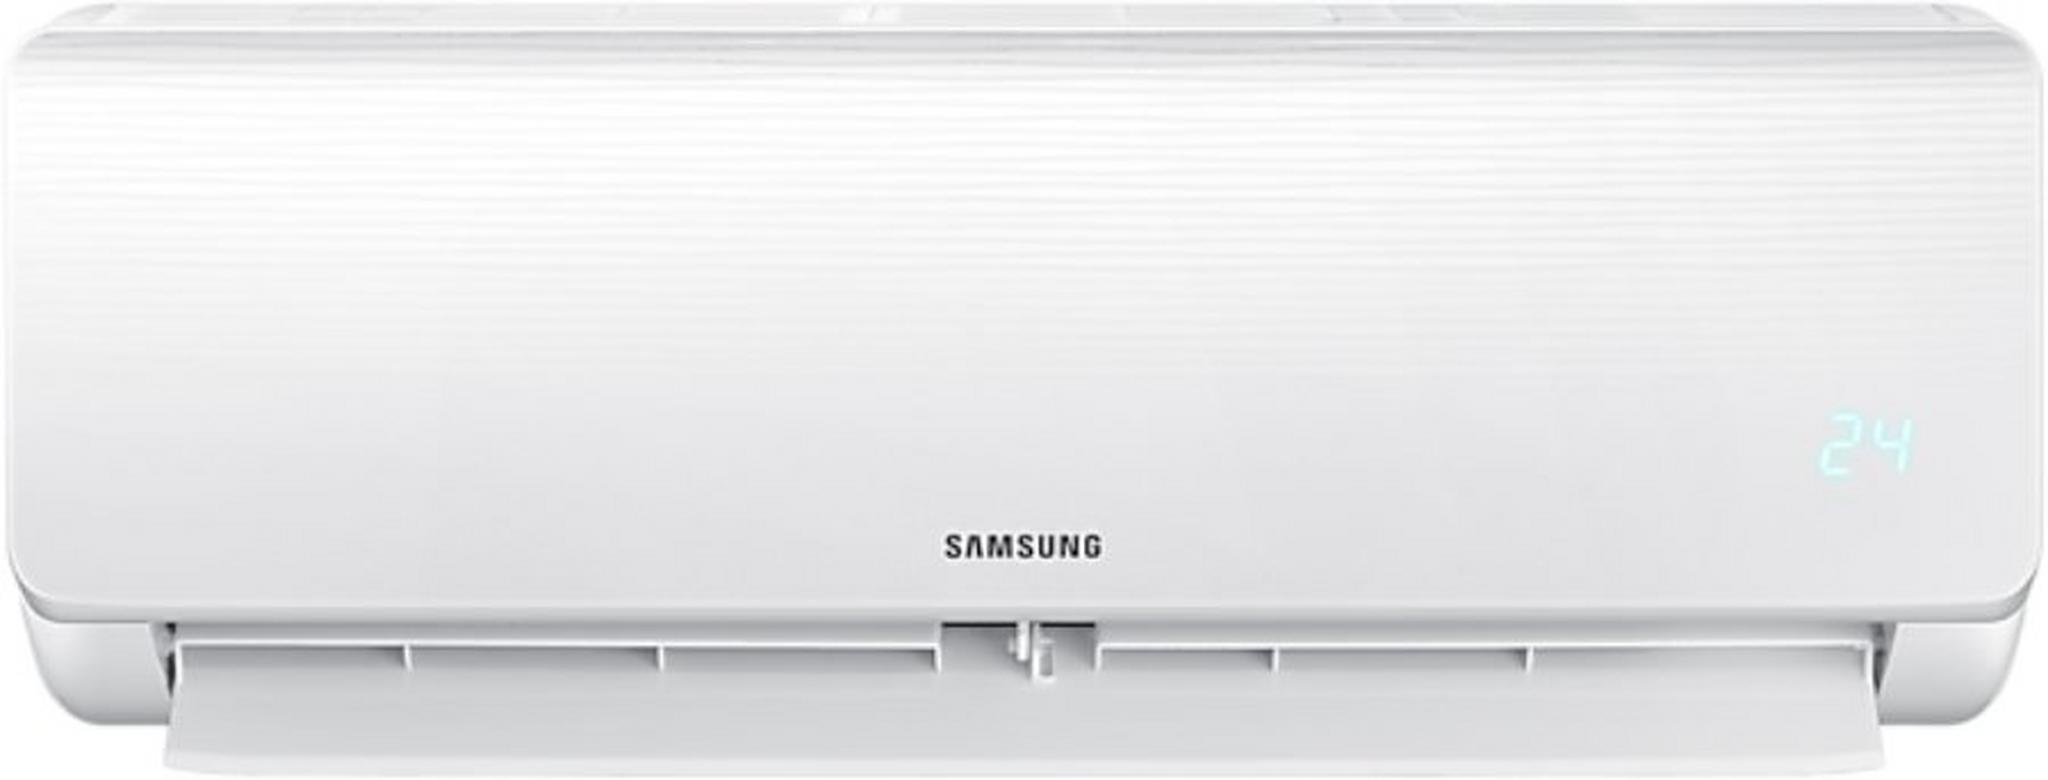 Samsung T4 18758 BTU Split AC, AR24TRHQLWK - White